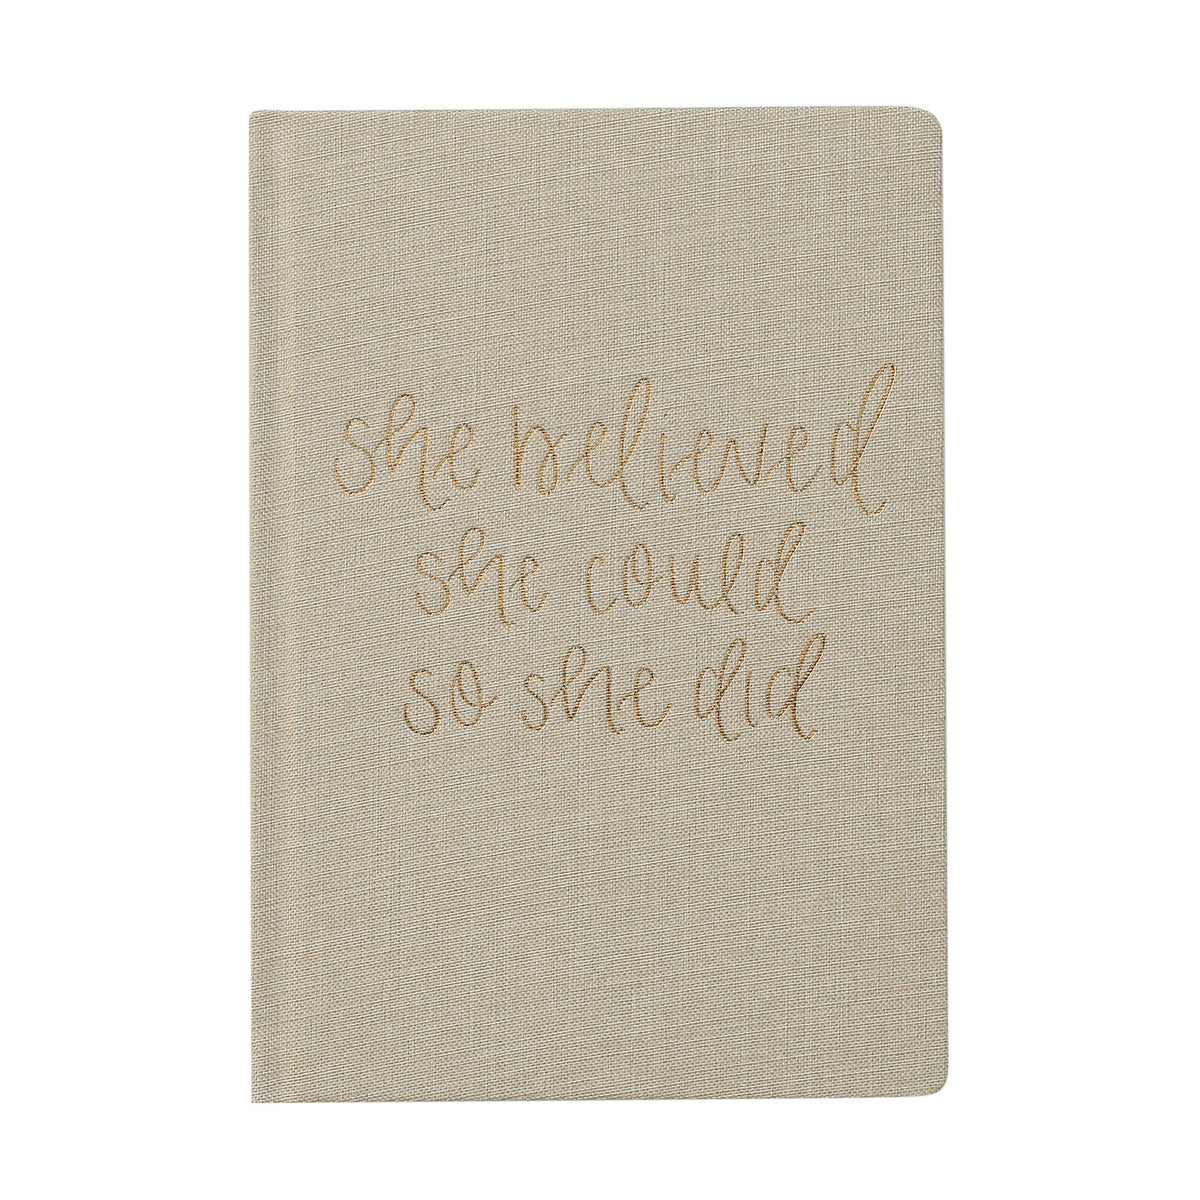 She Believed Journal